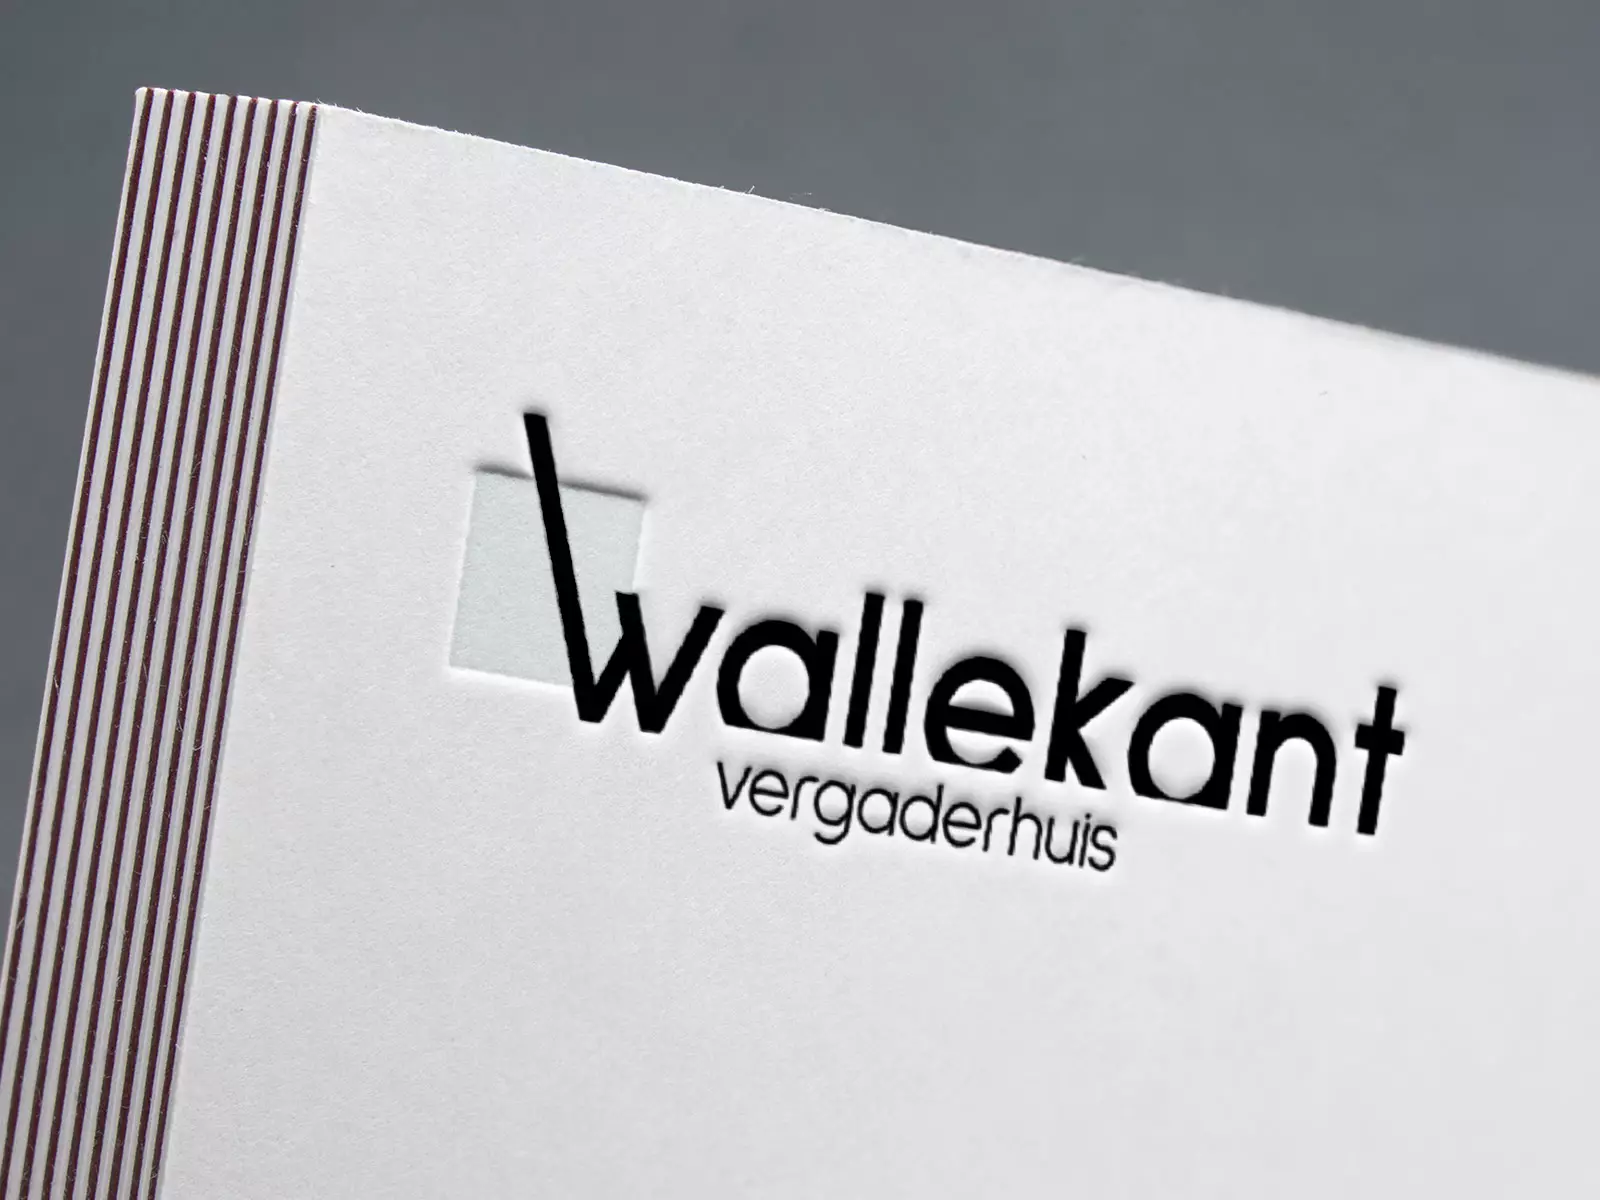 Logo Wallekant